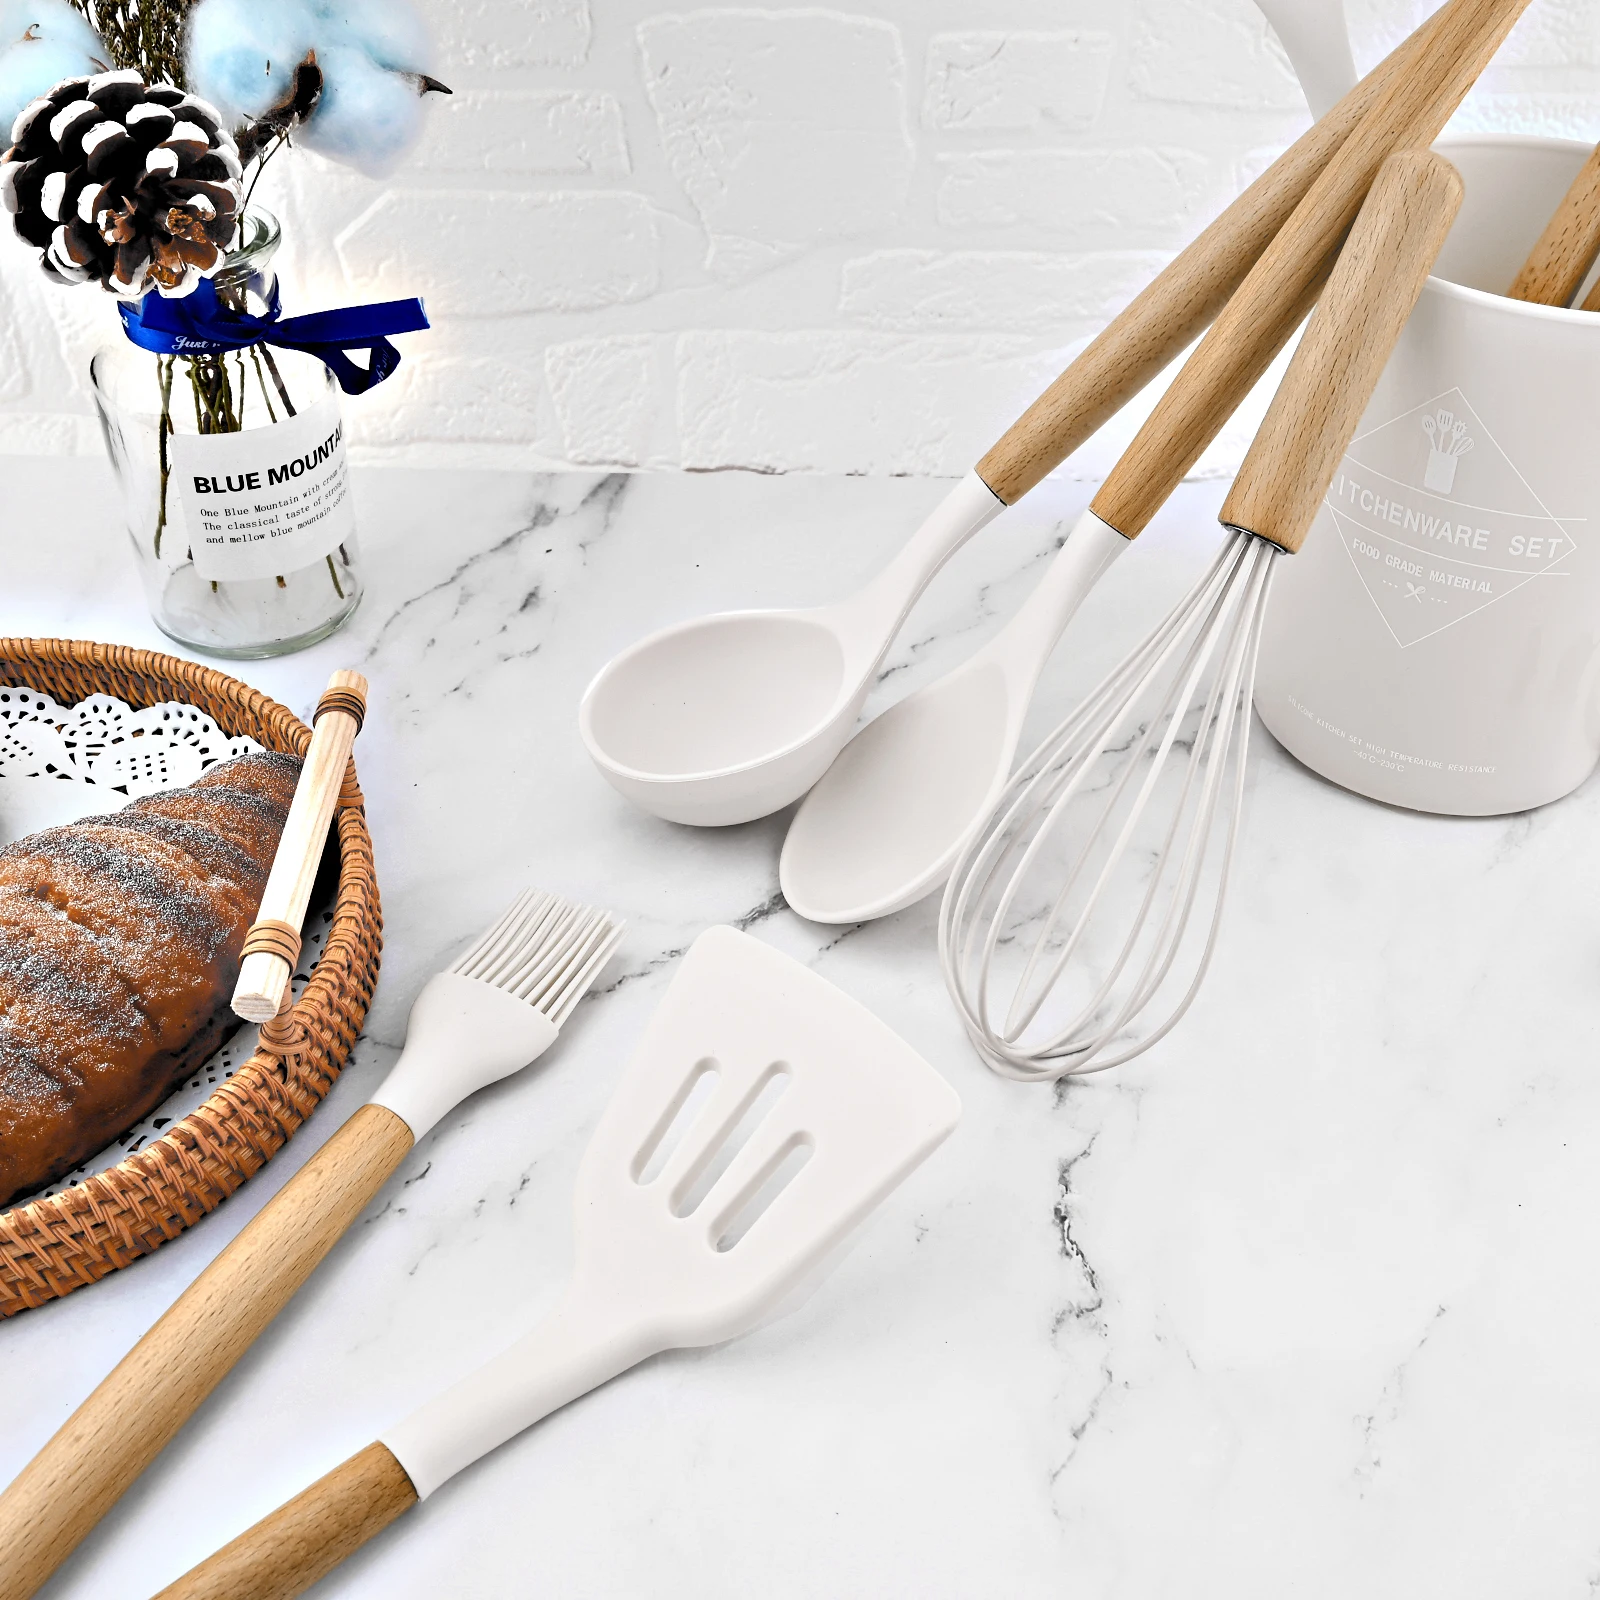 https://ae01.alicdn.com/kf/S2b20dddf15824849bf9b6c4dfe9577cdh/Silicone-Kitchenware-Cooking-Utensils-Set-Non-stick-Cookware-Spatula-Shovel-Egg-Beaters-Wooden-Handle-Kitchen-Cooking.jpg